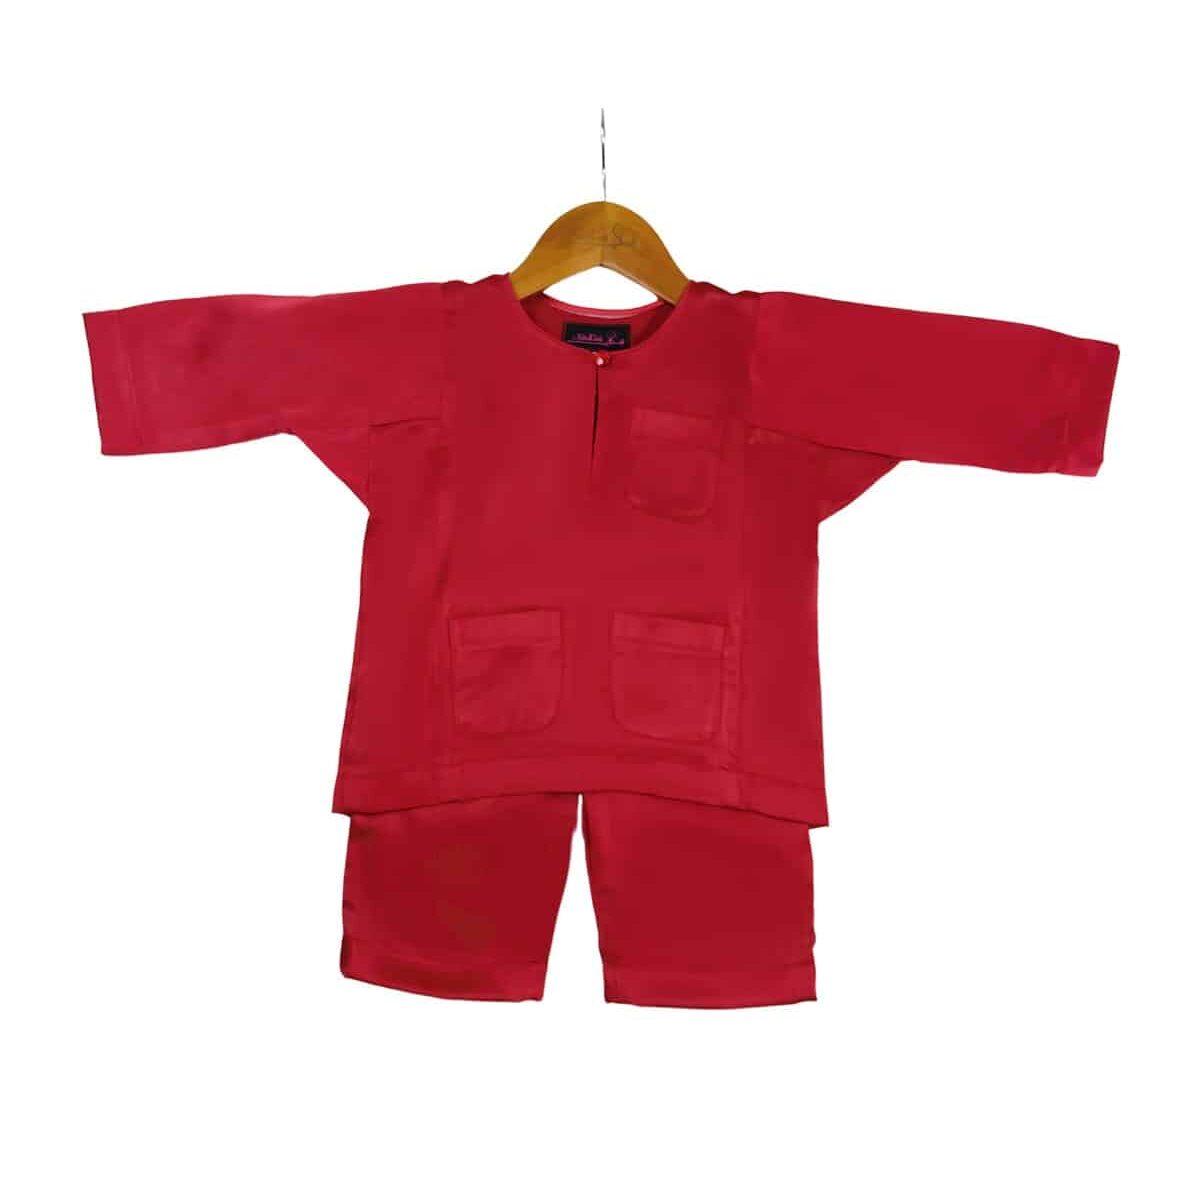 Baju Melayu Red Chili | Exclusive Kids Clothing & Accesories